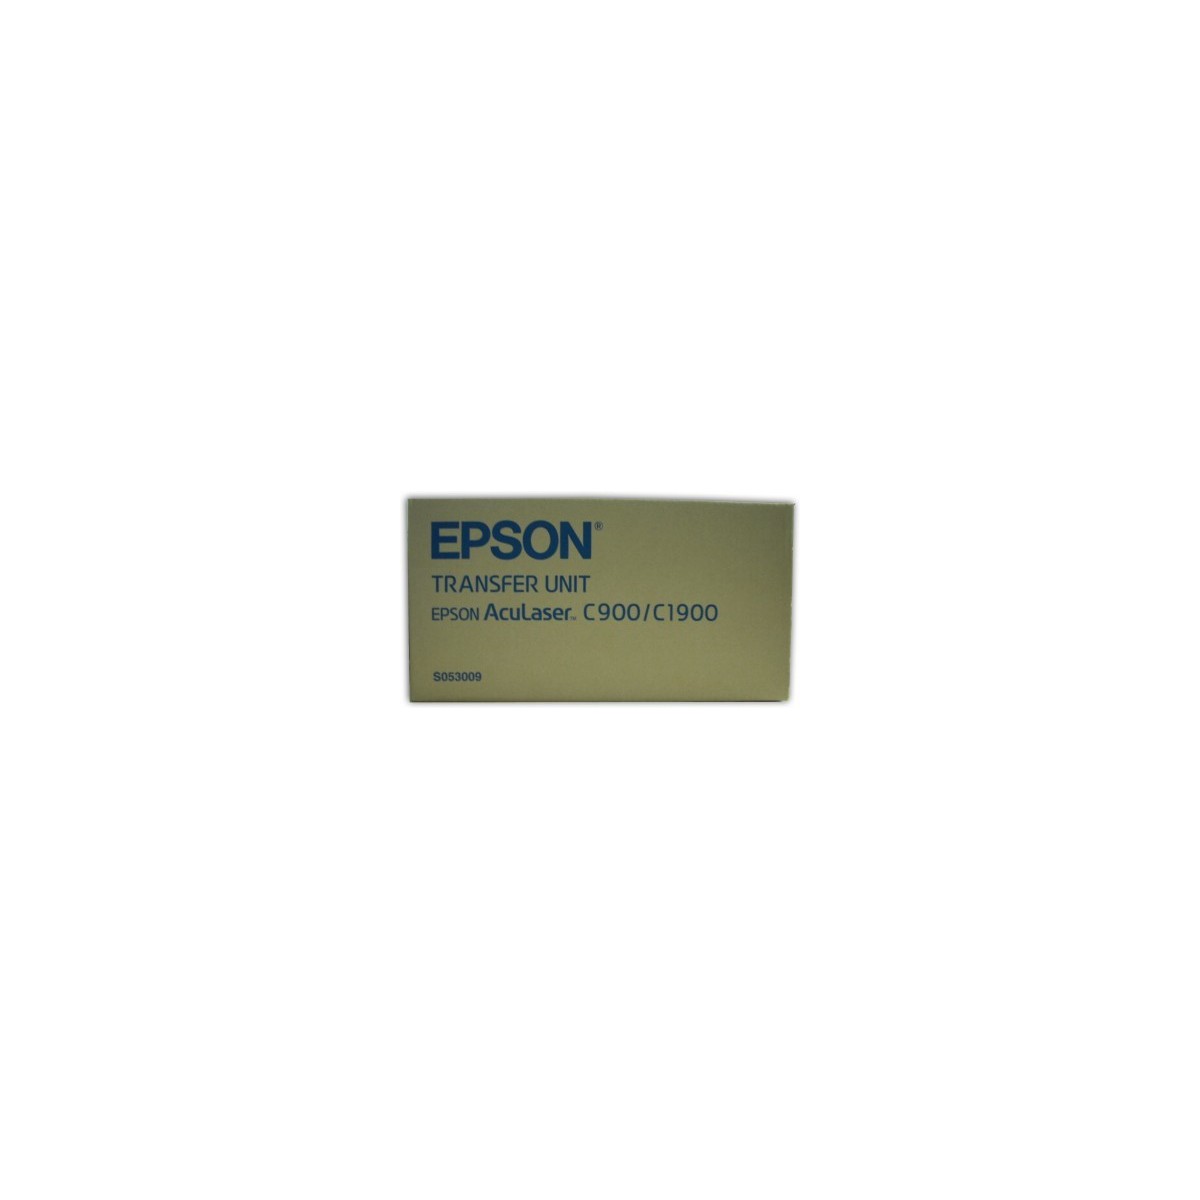 Epson AC-L C900/1900 Transfer belt Unit 210k - 210000 pages - Black - Grey - AcuLaser C900/C1900 - China - 1 pc(s) - 390 mm